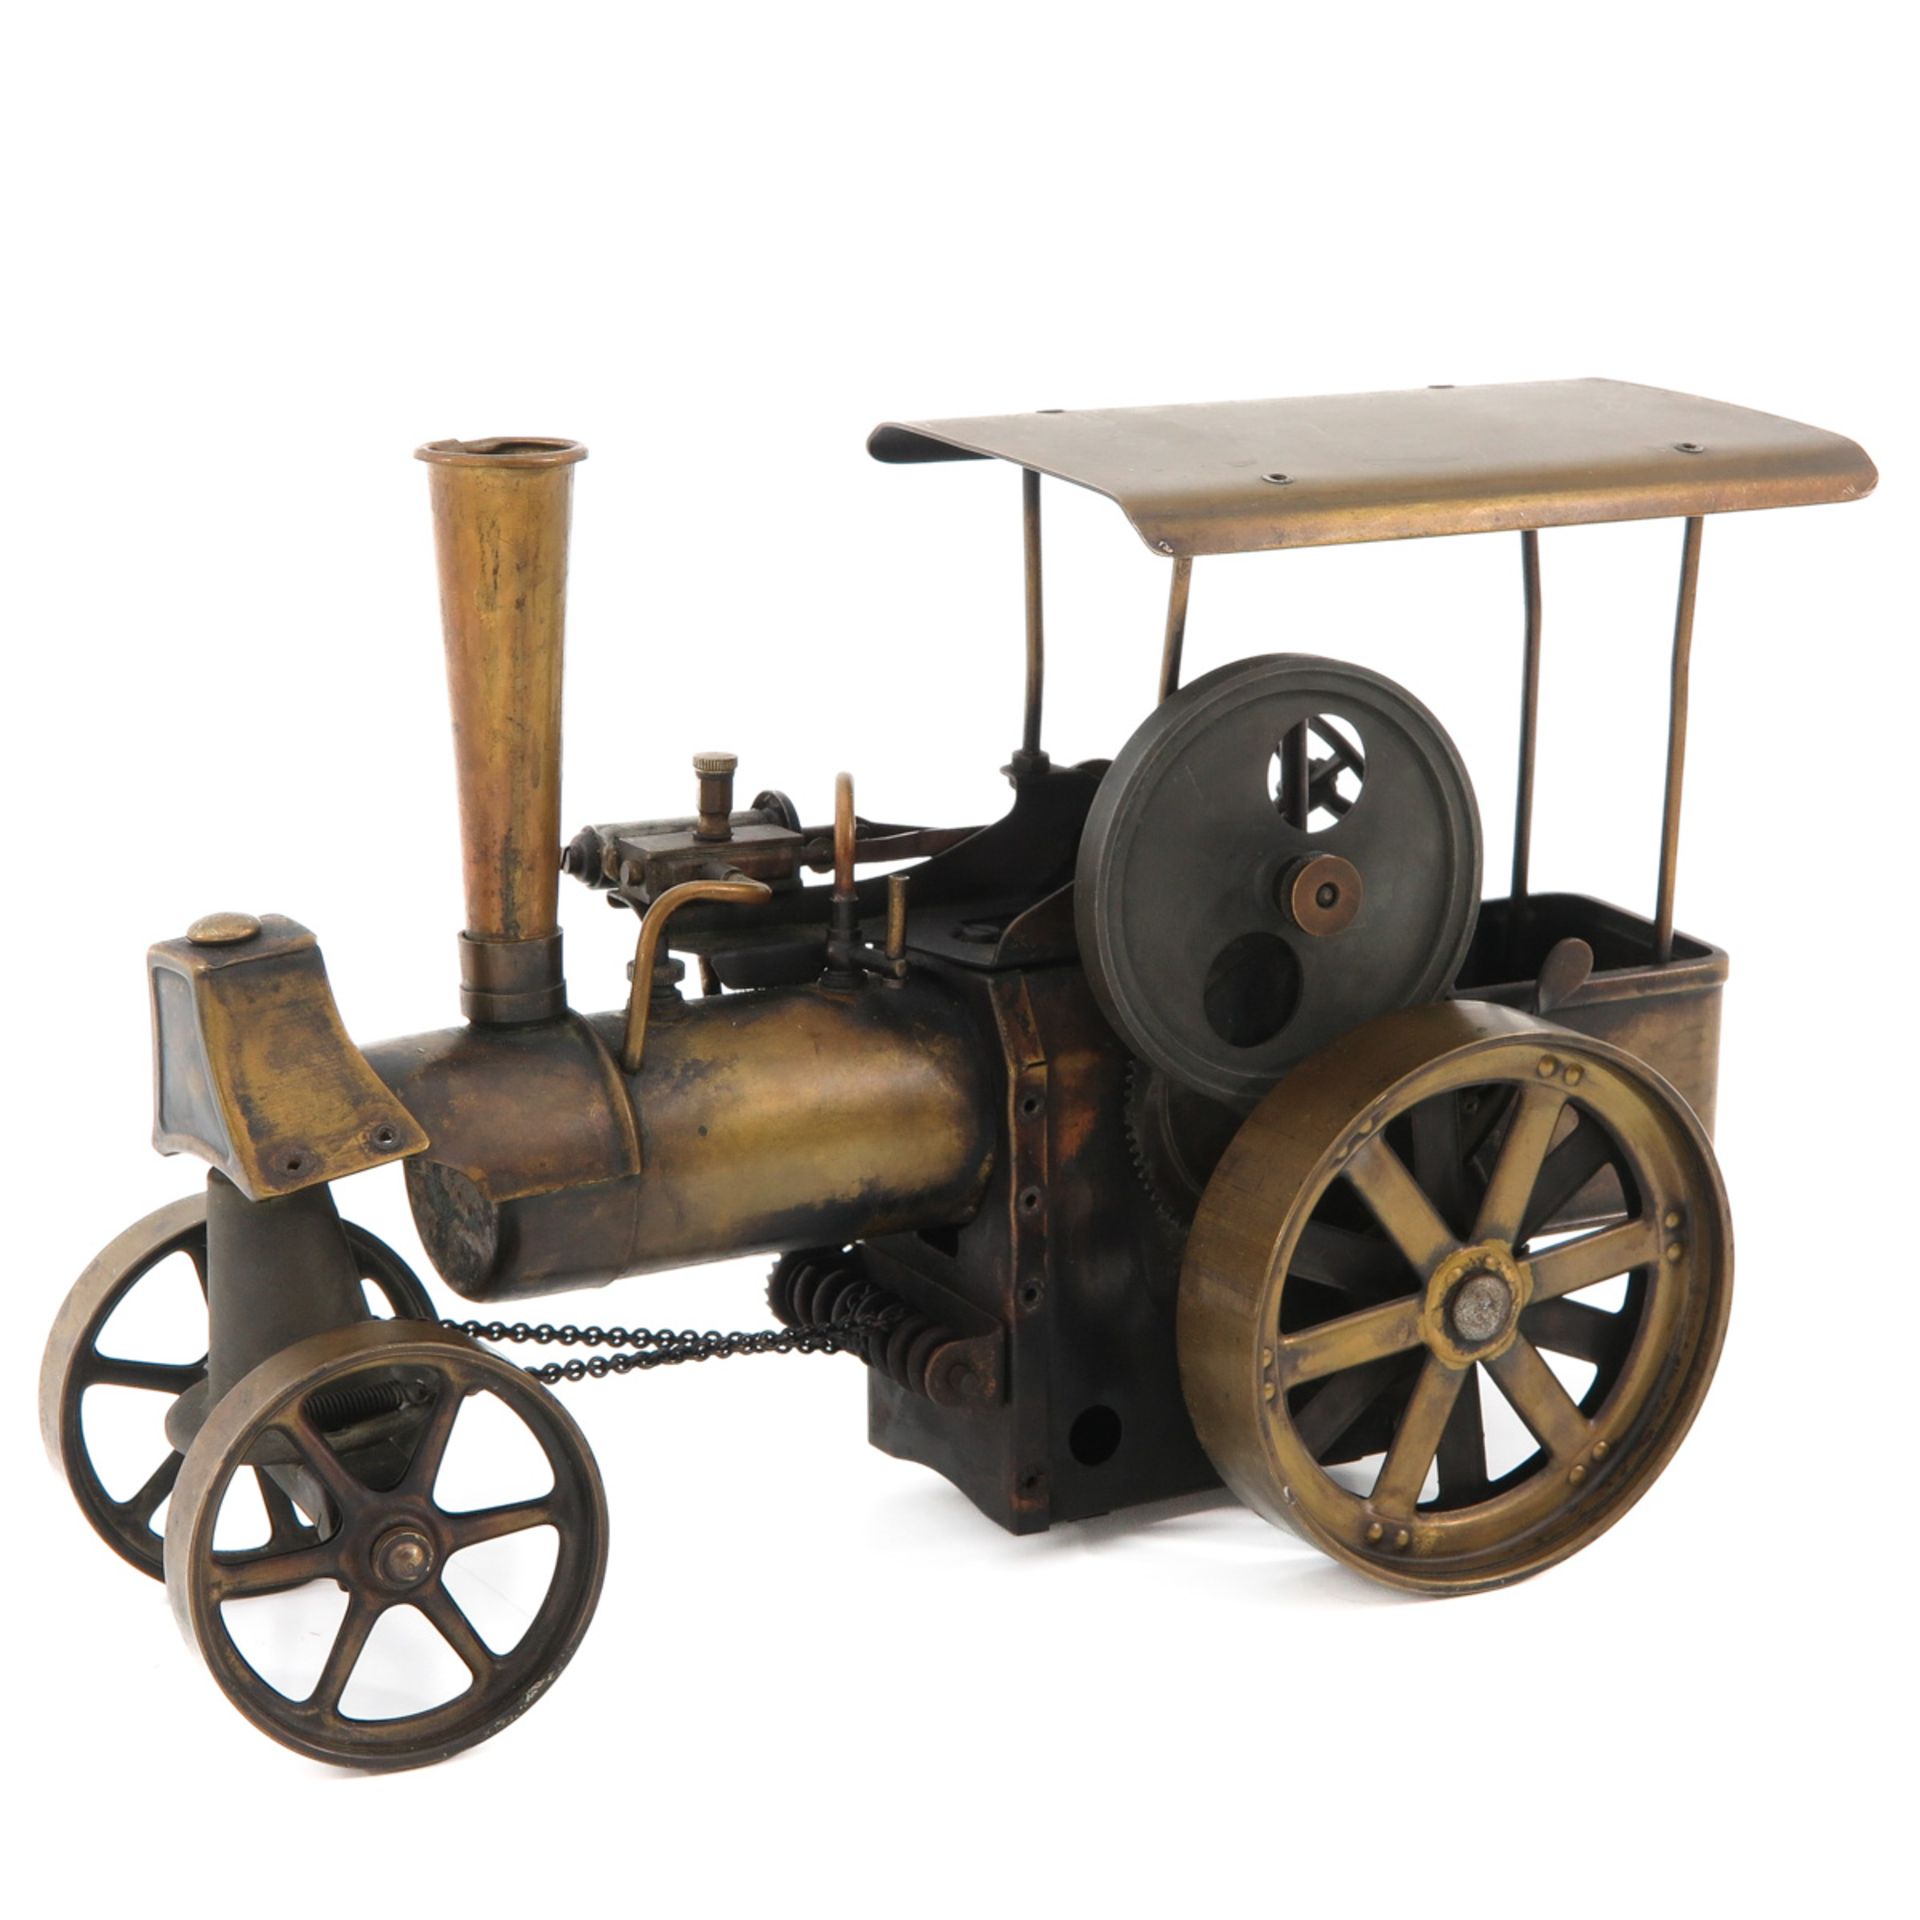 A Copper Steam Engine